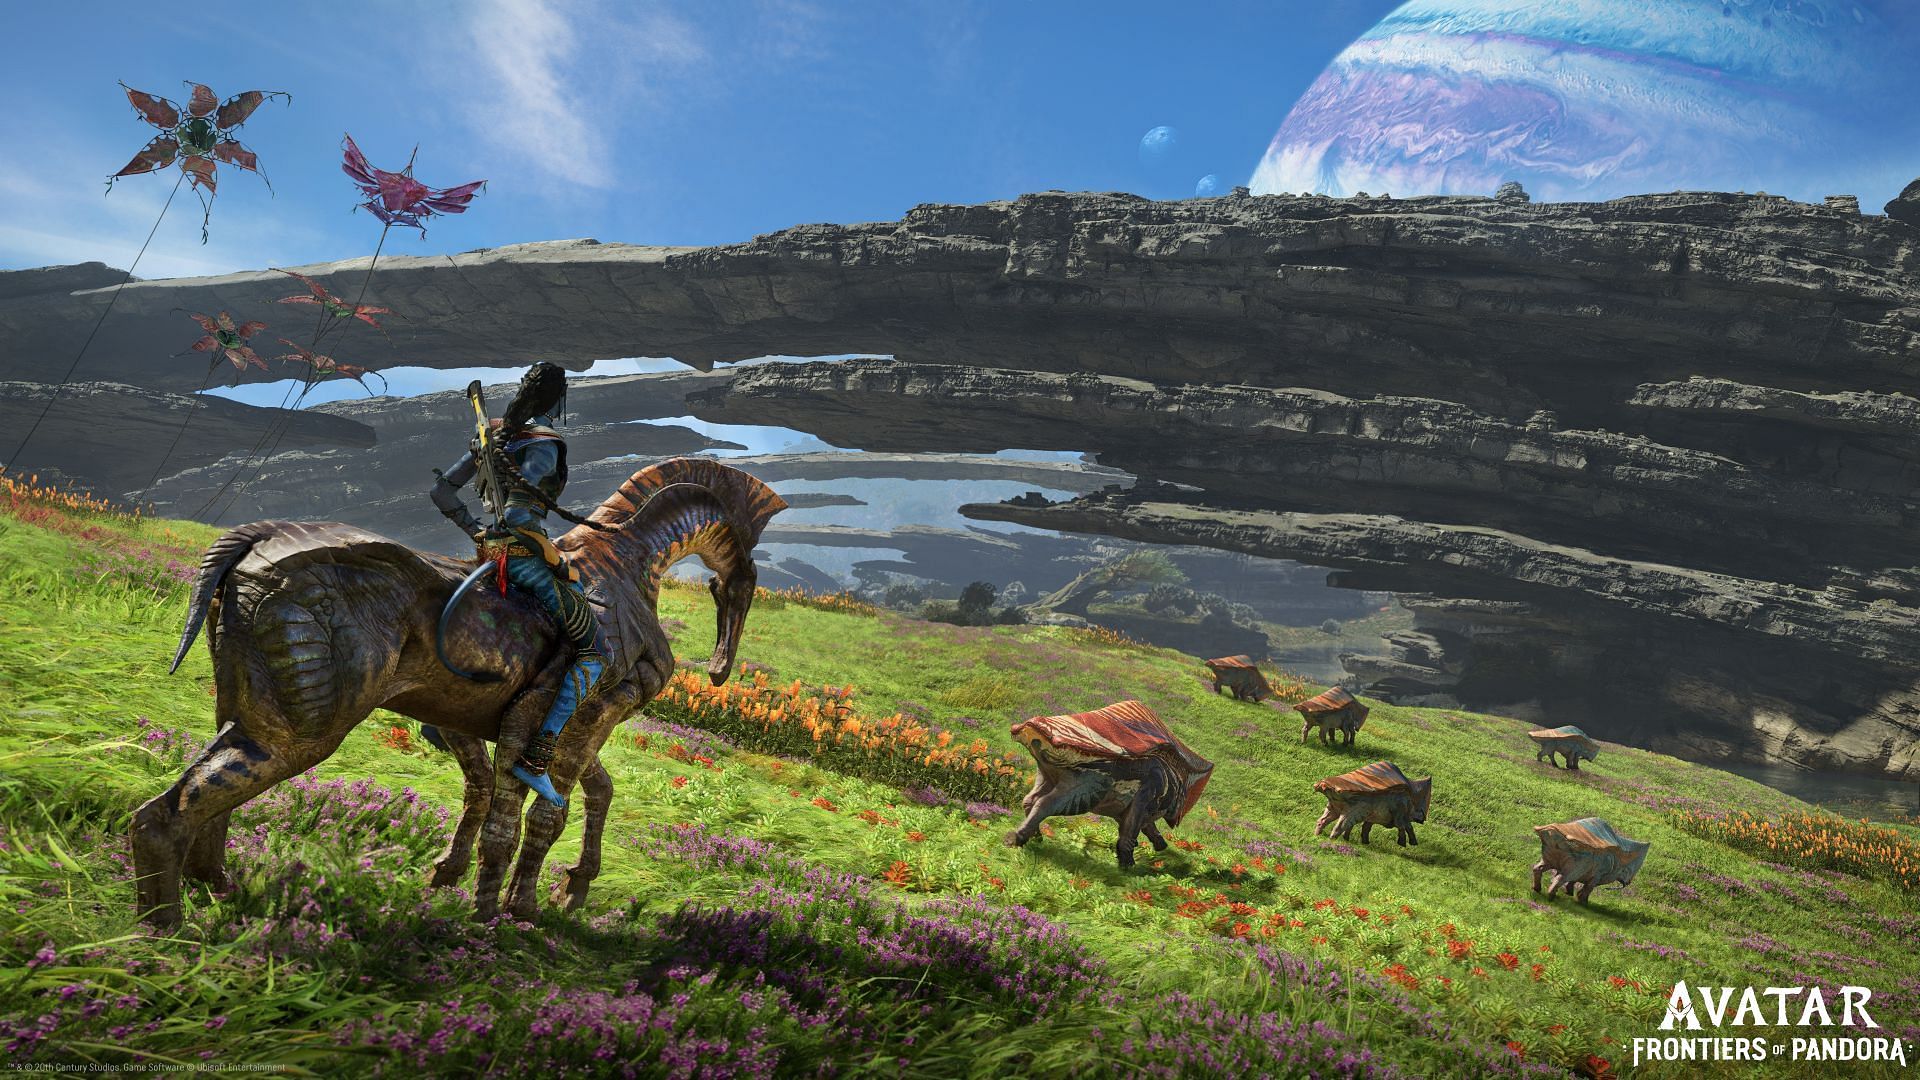 Avatar Frontiers of Pandora (Image via Ubisoft)